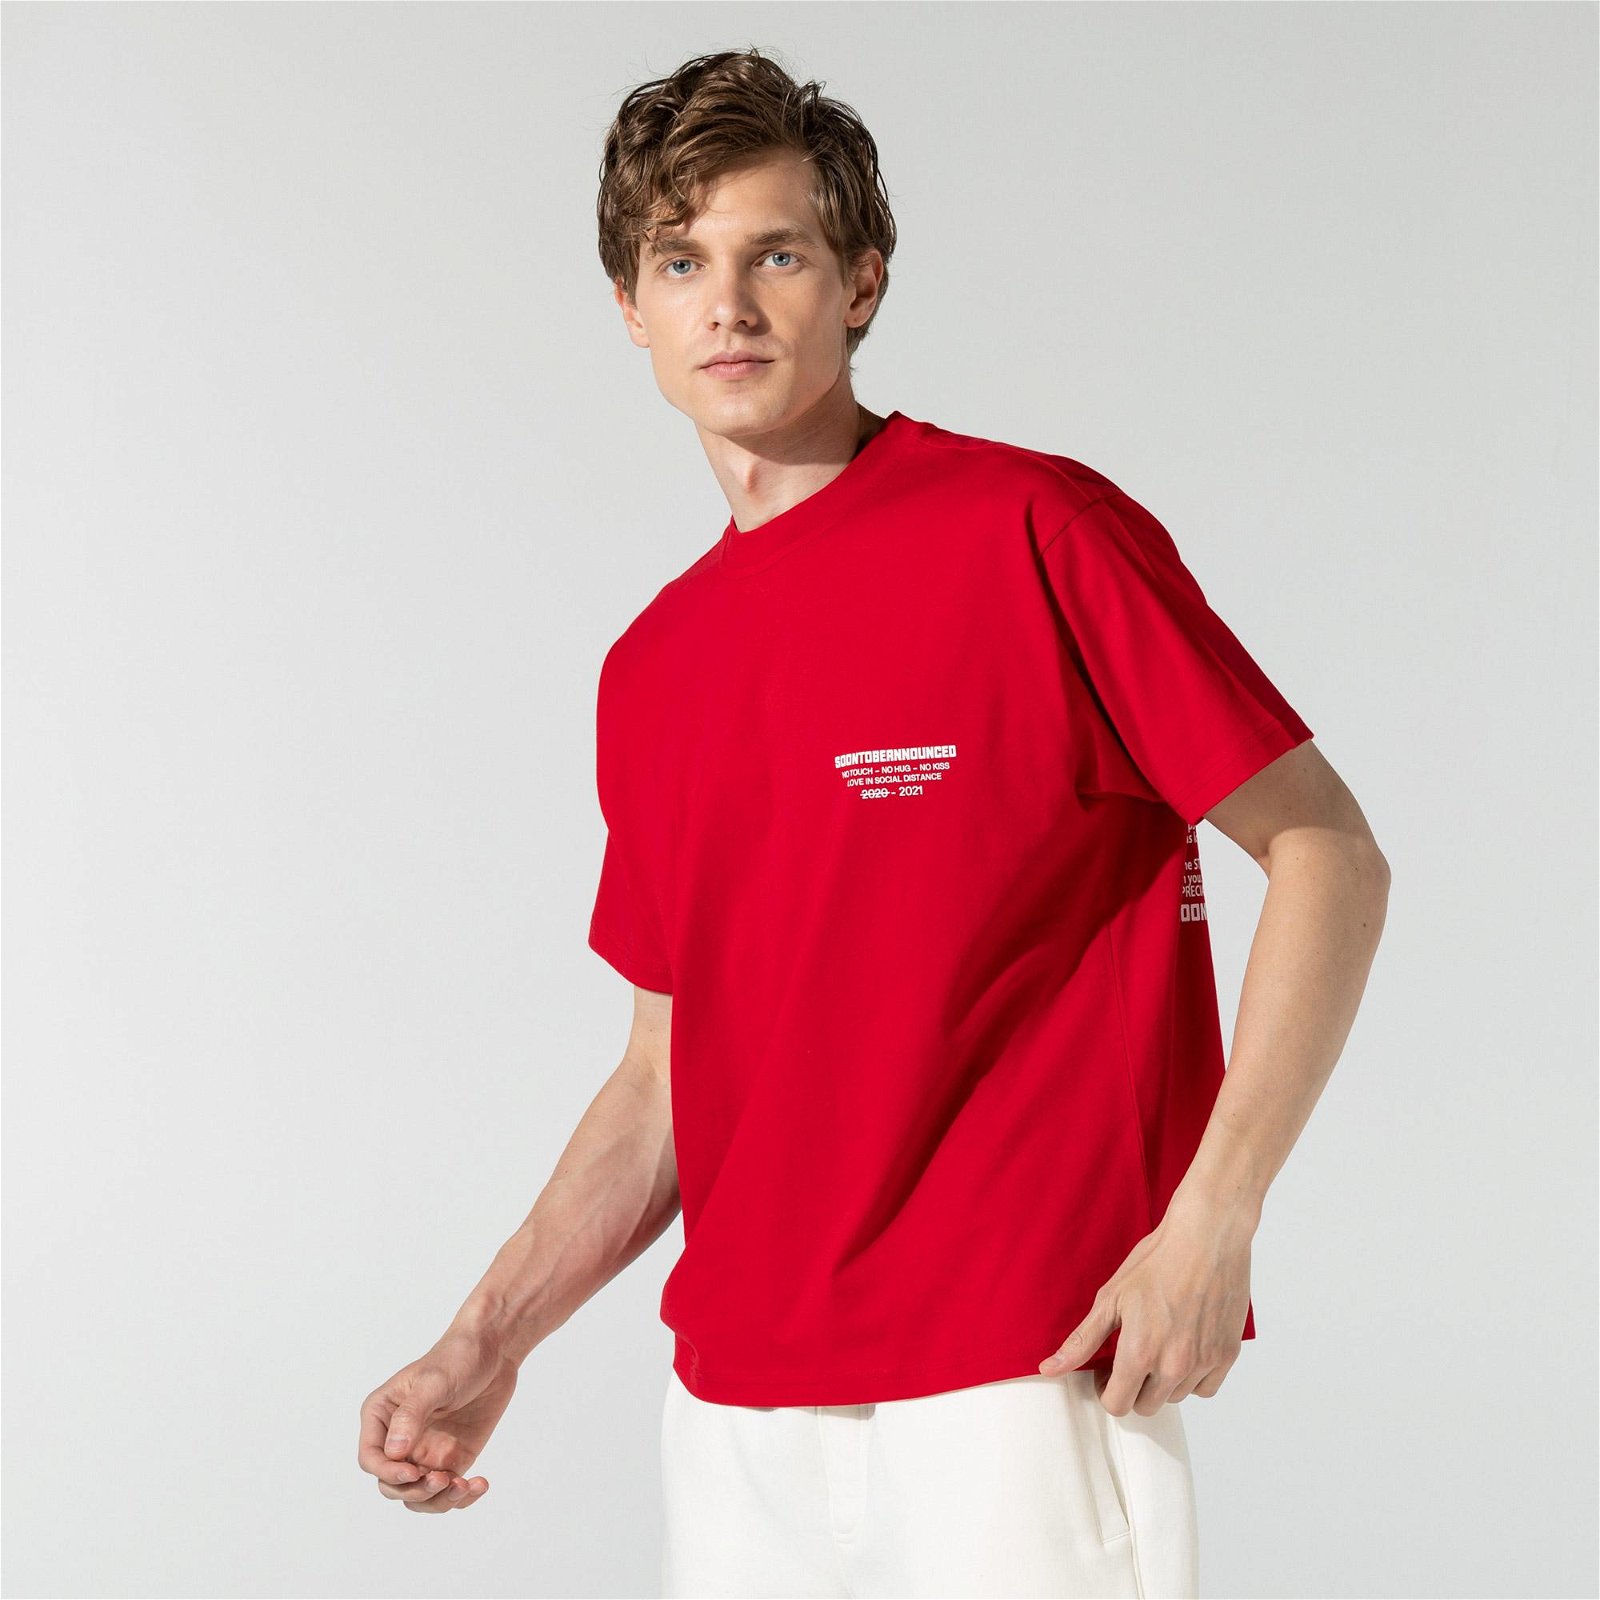 SOONTOBEANNOUNCED 2020-2021 Printed Unisex Kırmızı T-Shirt